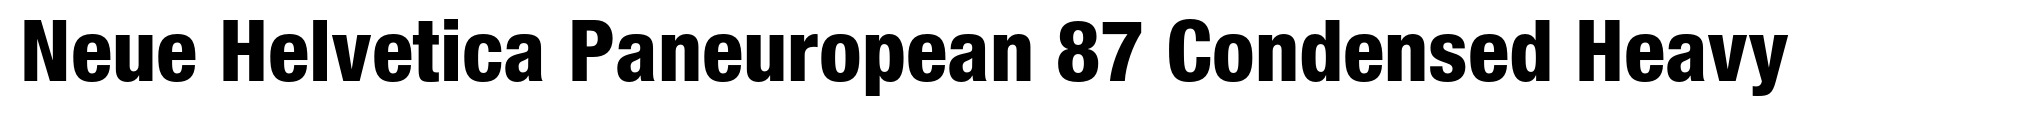 Neue Helvetica Paneuropean 87 Condensed Heavy image